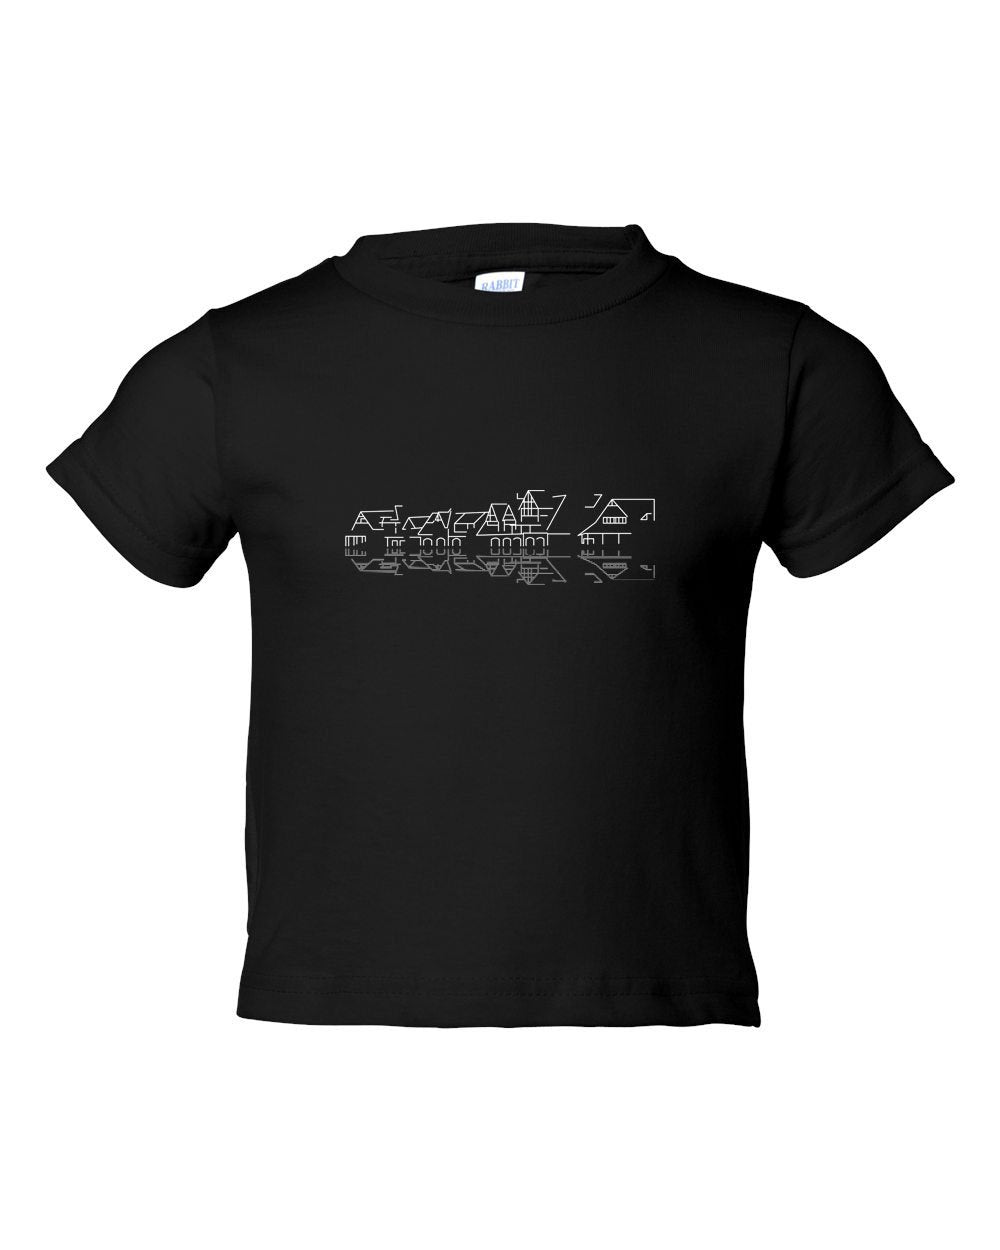 Boathouse Row TODDLER T-Shirt